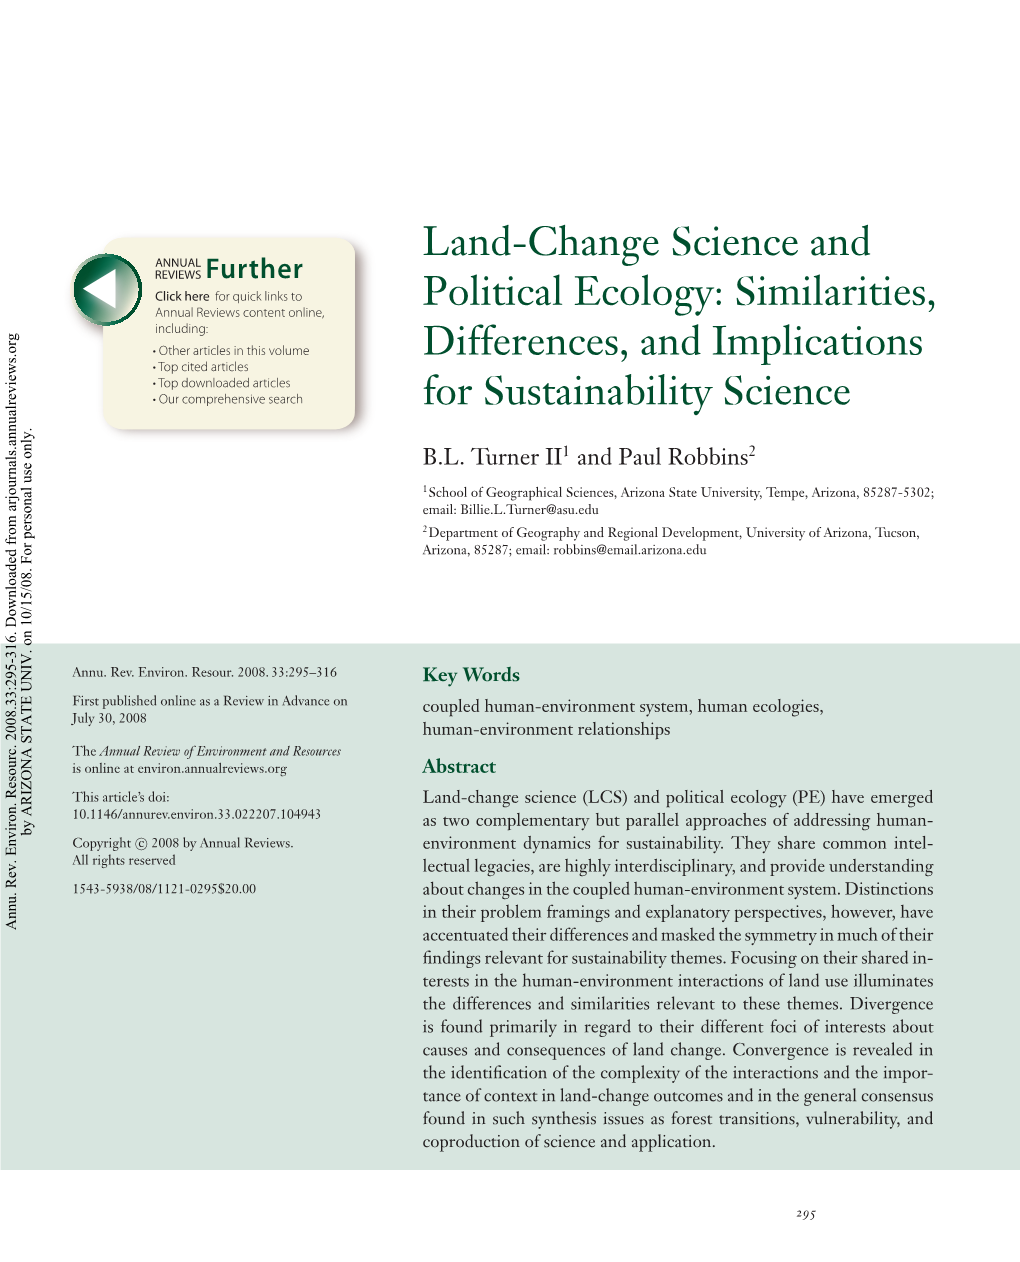 Land-Change Science and Political Ecology 297 ANRV357-EG33-13 ARI 15 September 2008 16:23